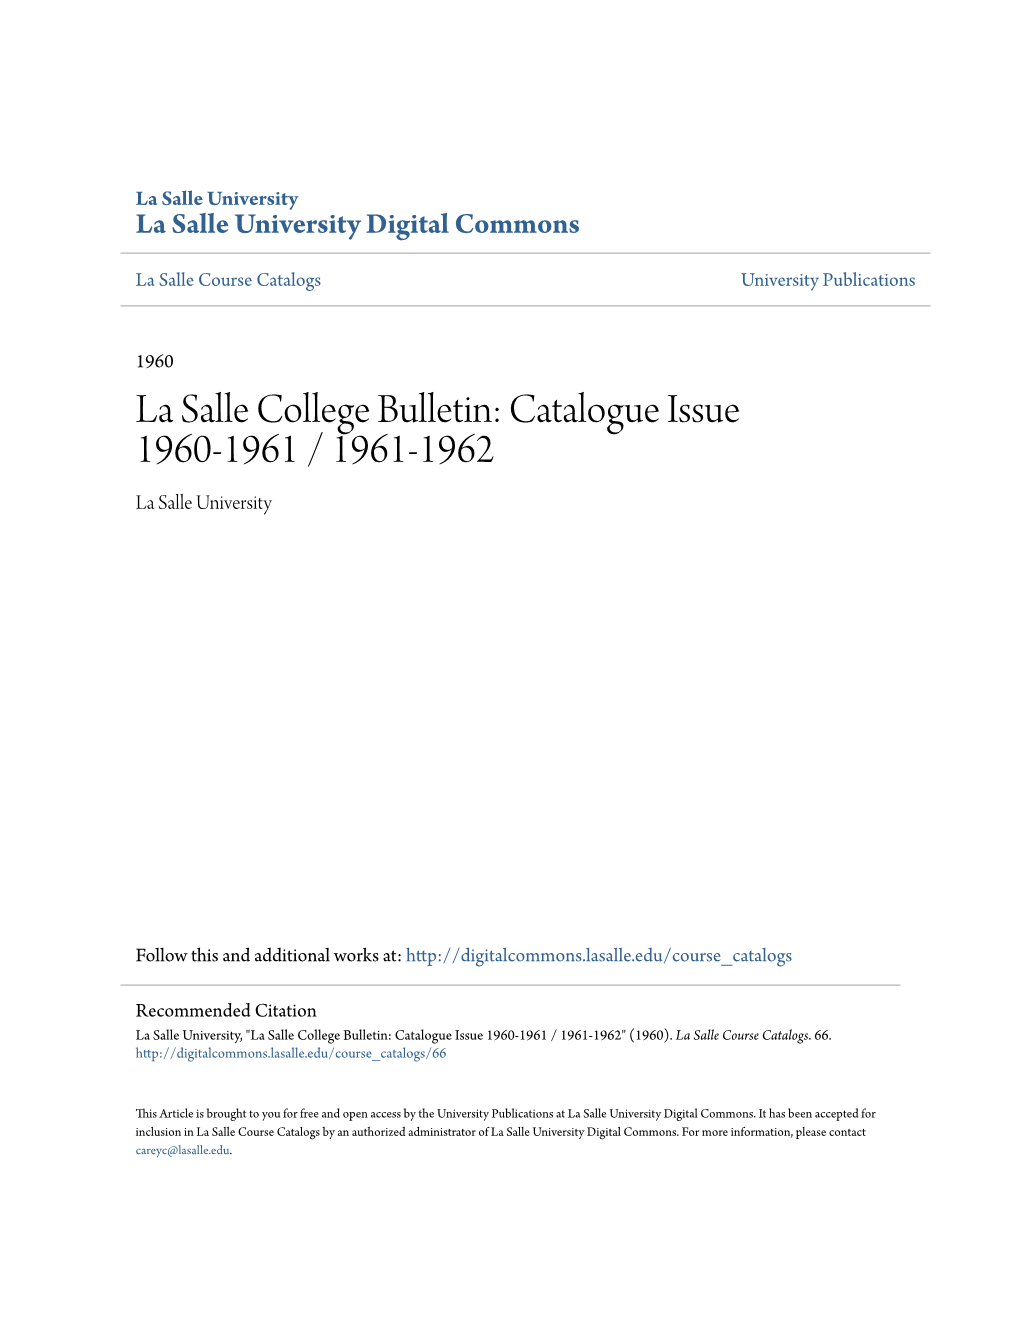 La Salle College Bulletin: Catalogue Issue 1960-1961 / 1961-1962 La Salle University